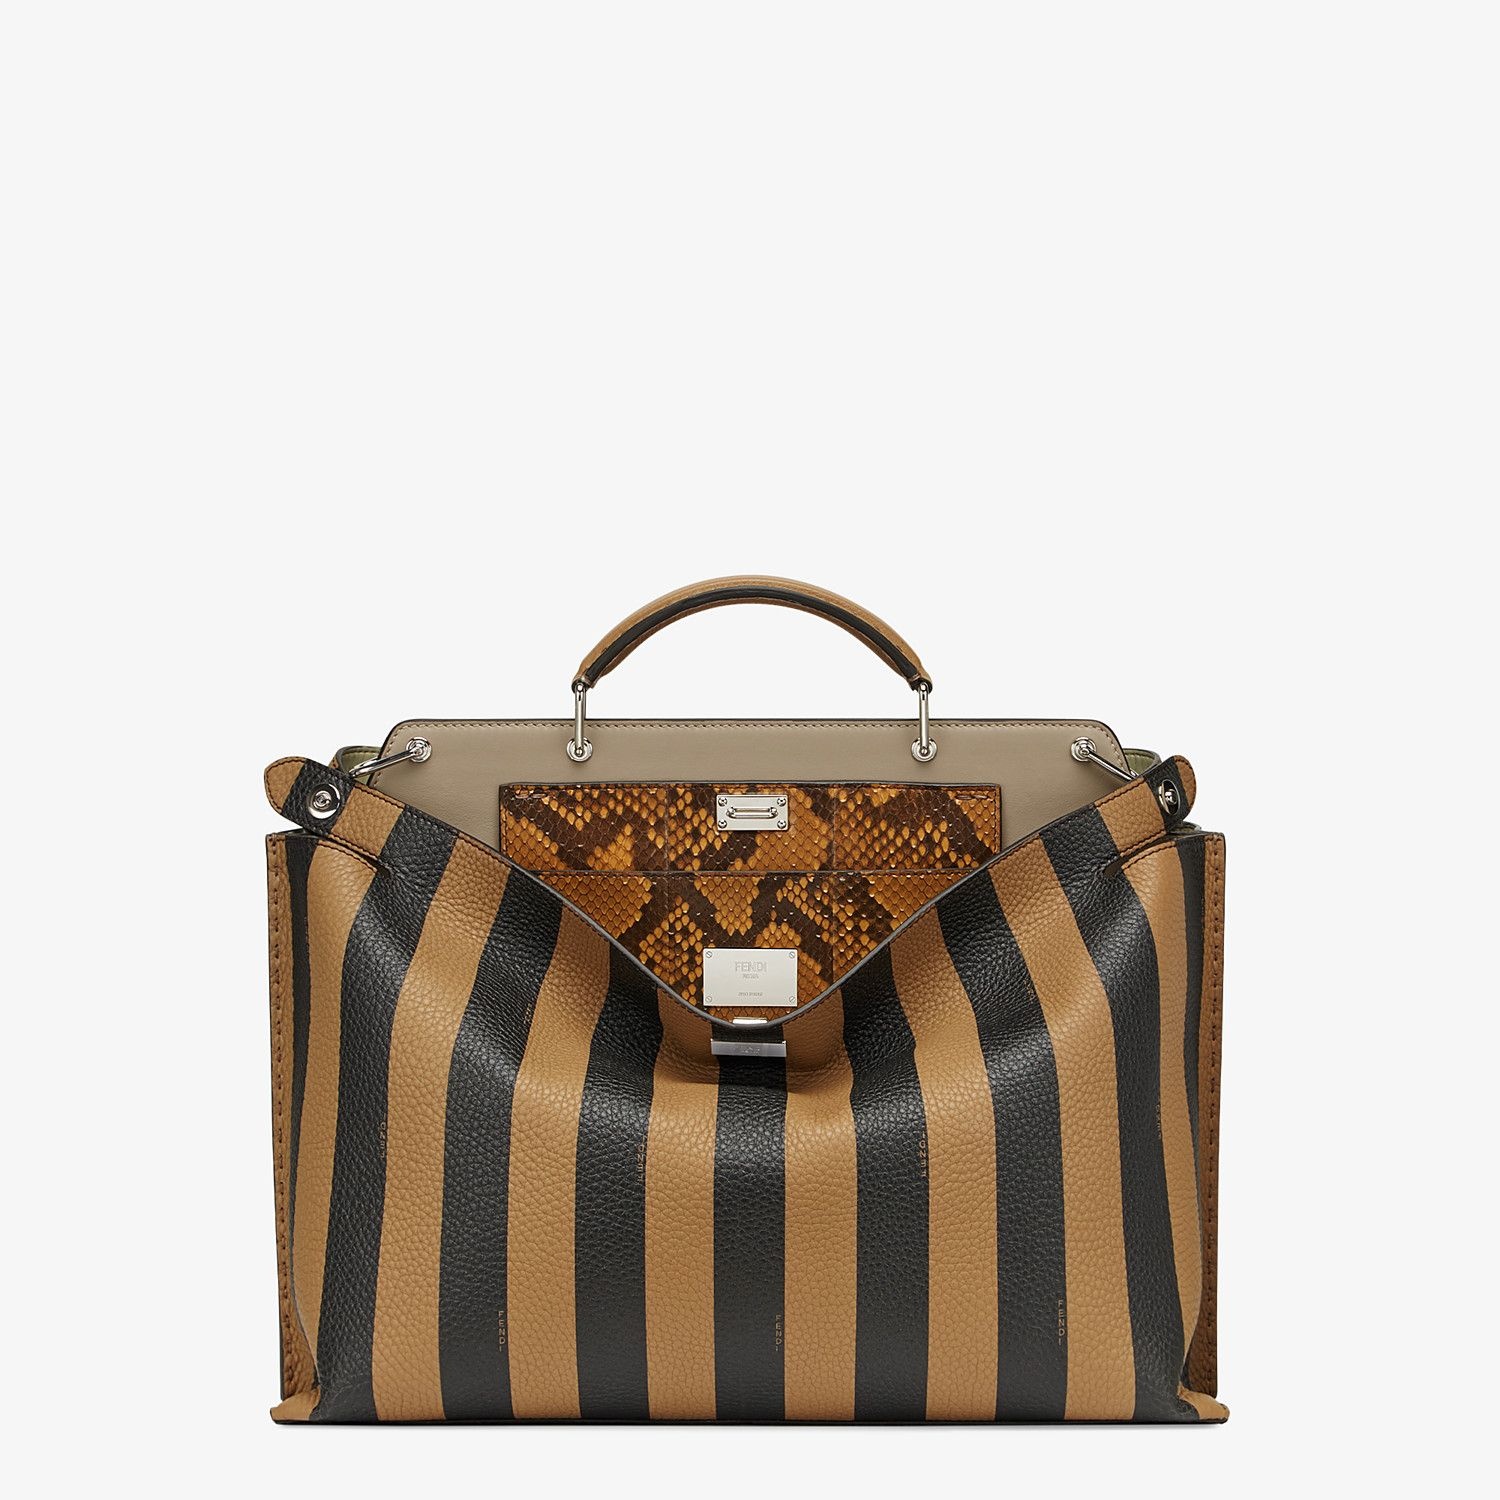  Brown leather bag - 1